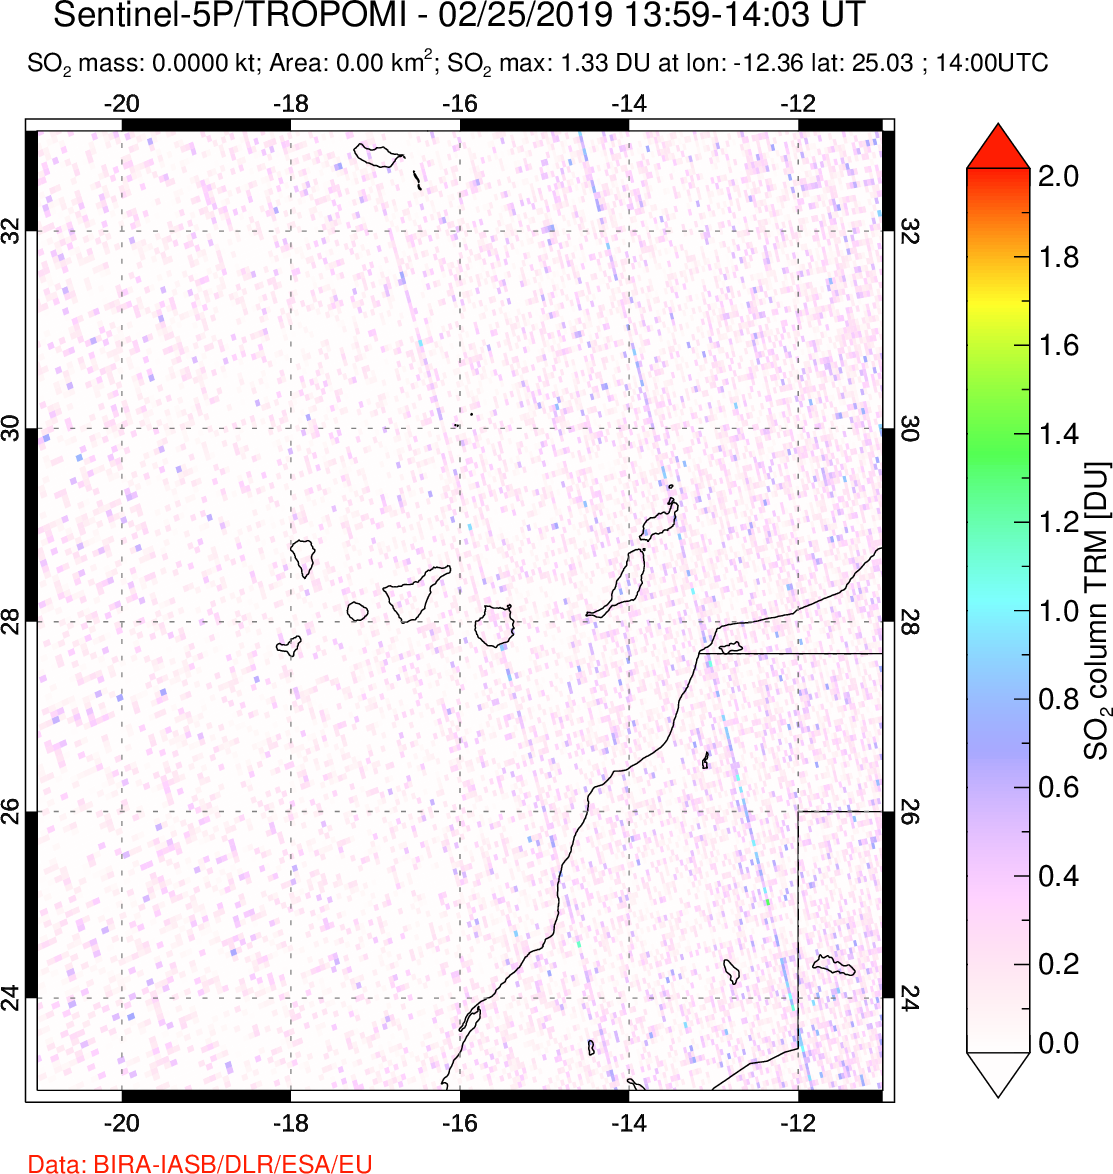 A sulfur dioxide image over Canary Islands on Feb 25, 2019.